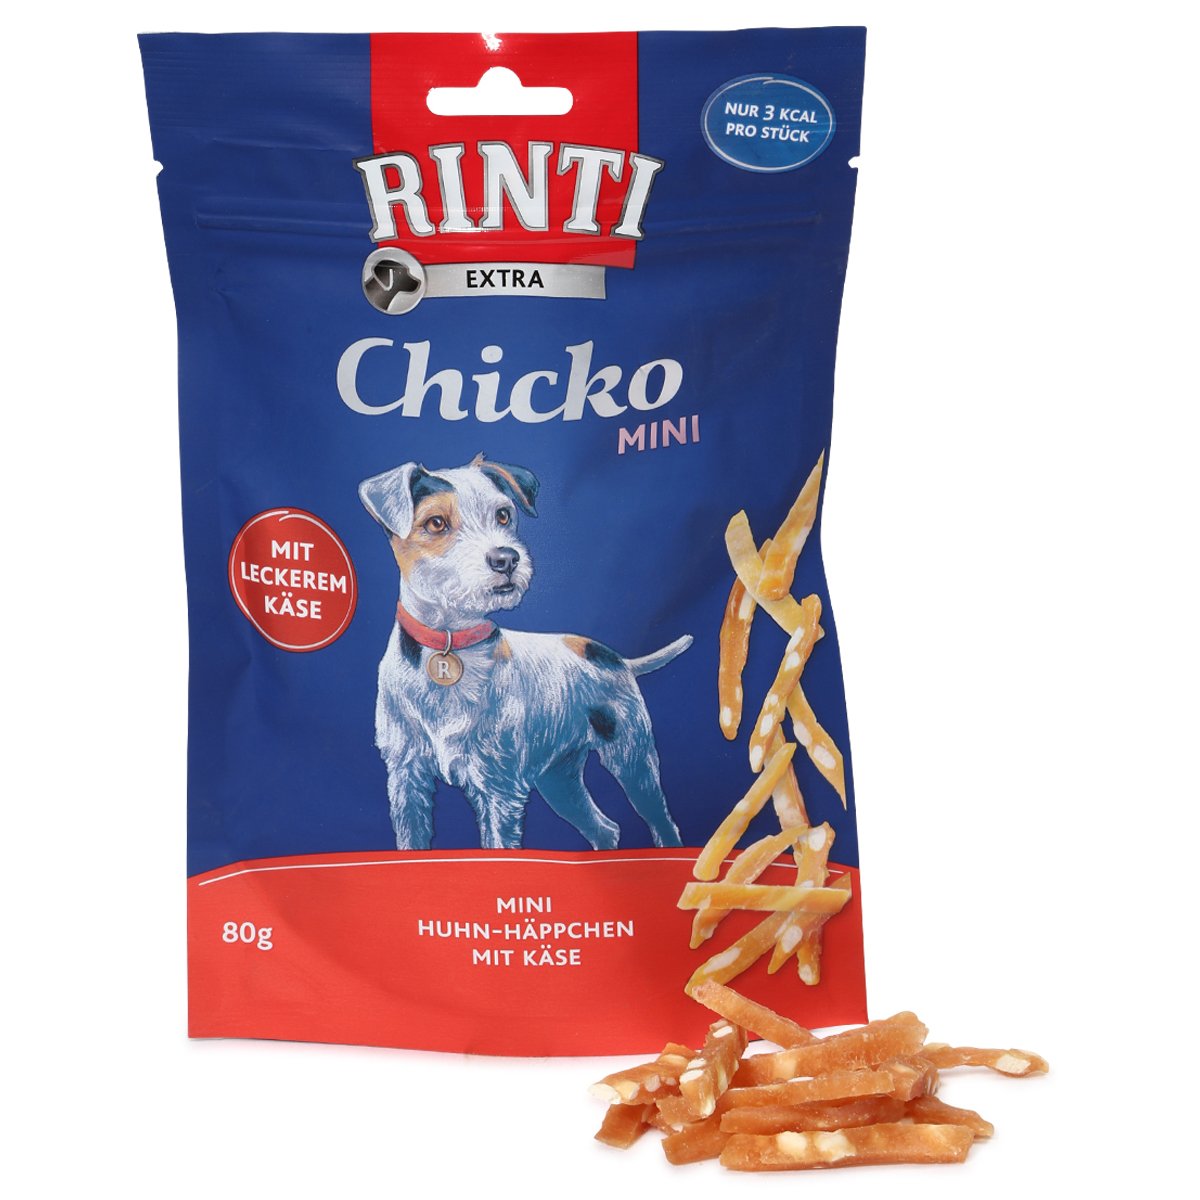 Rinti Extra Chicko Mini Huhn-Häppchen mit Käse 80g